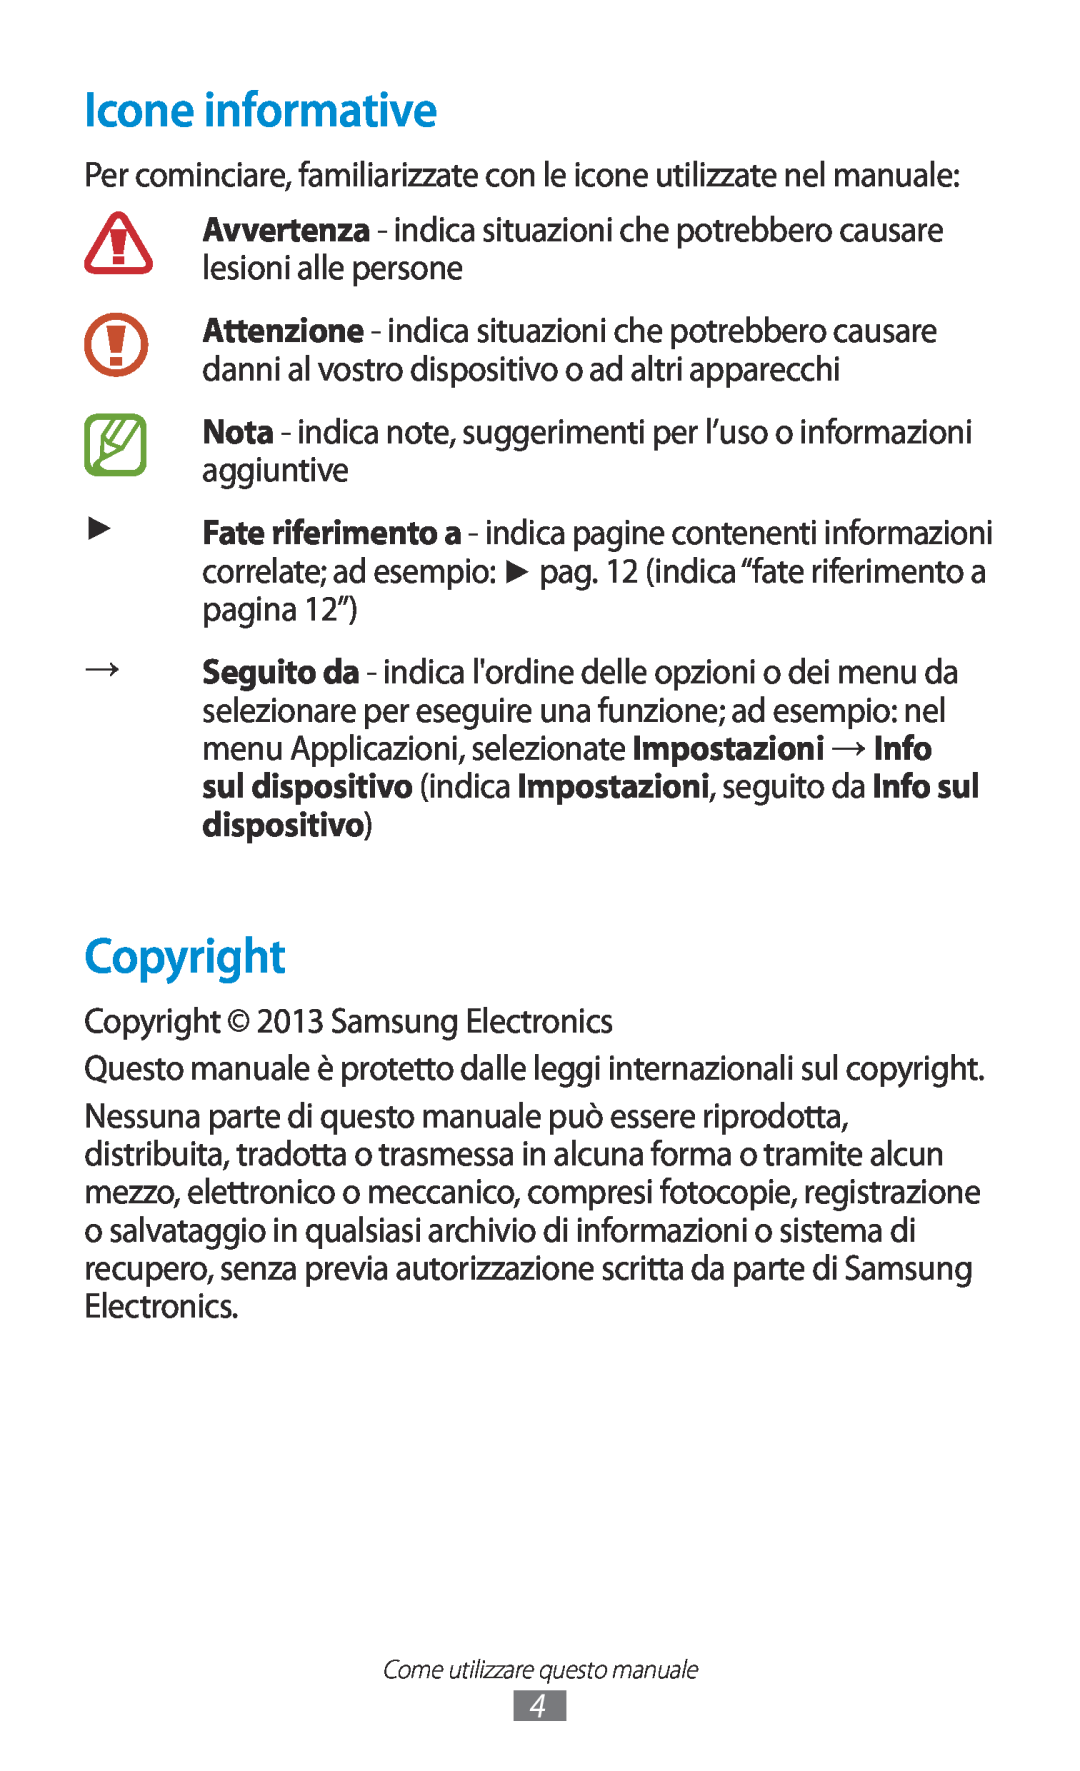 Samsung GT-S7560ZKATIM, GT-S7560UWAWIN, GT-S7560ZKAXEO, GT-S7560ZKAWIN, GT-S7560UWATIM manual Icone informative, Copyright 